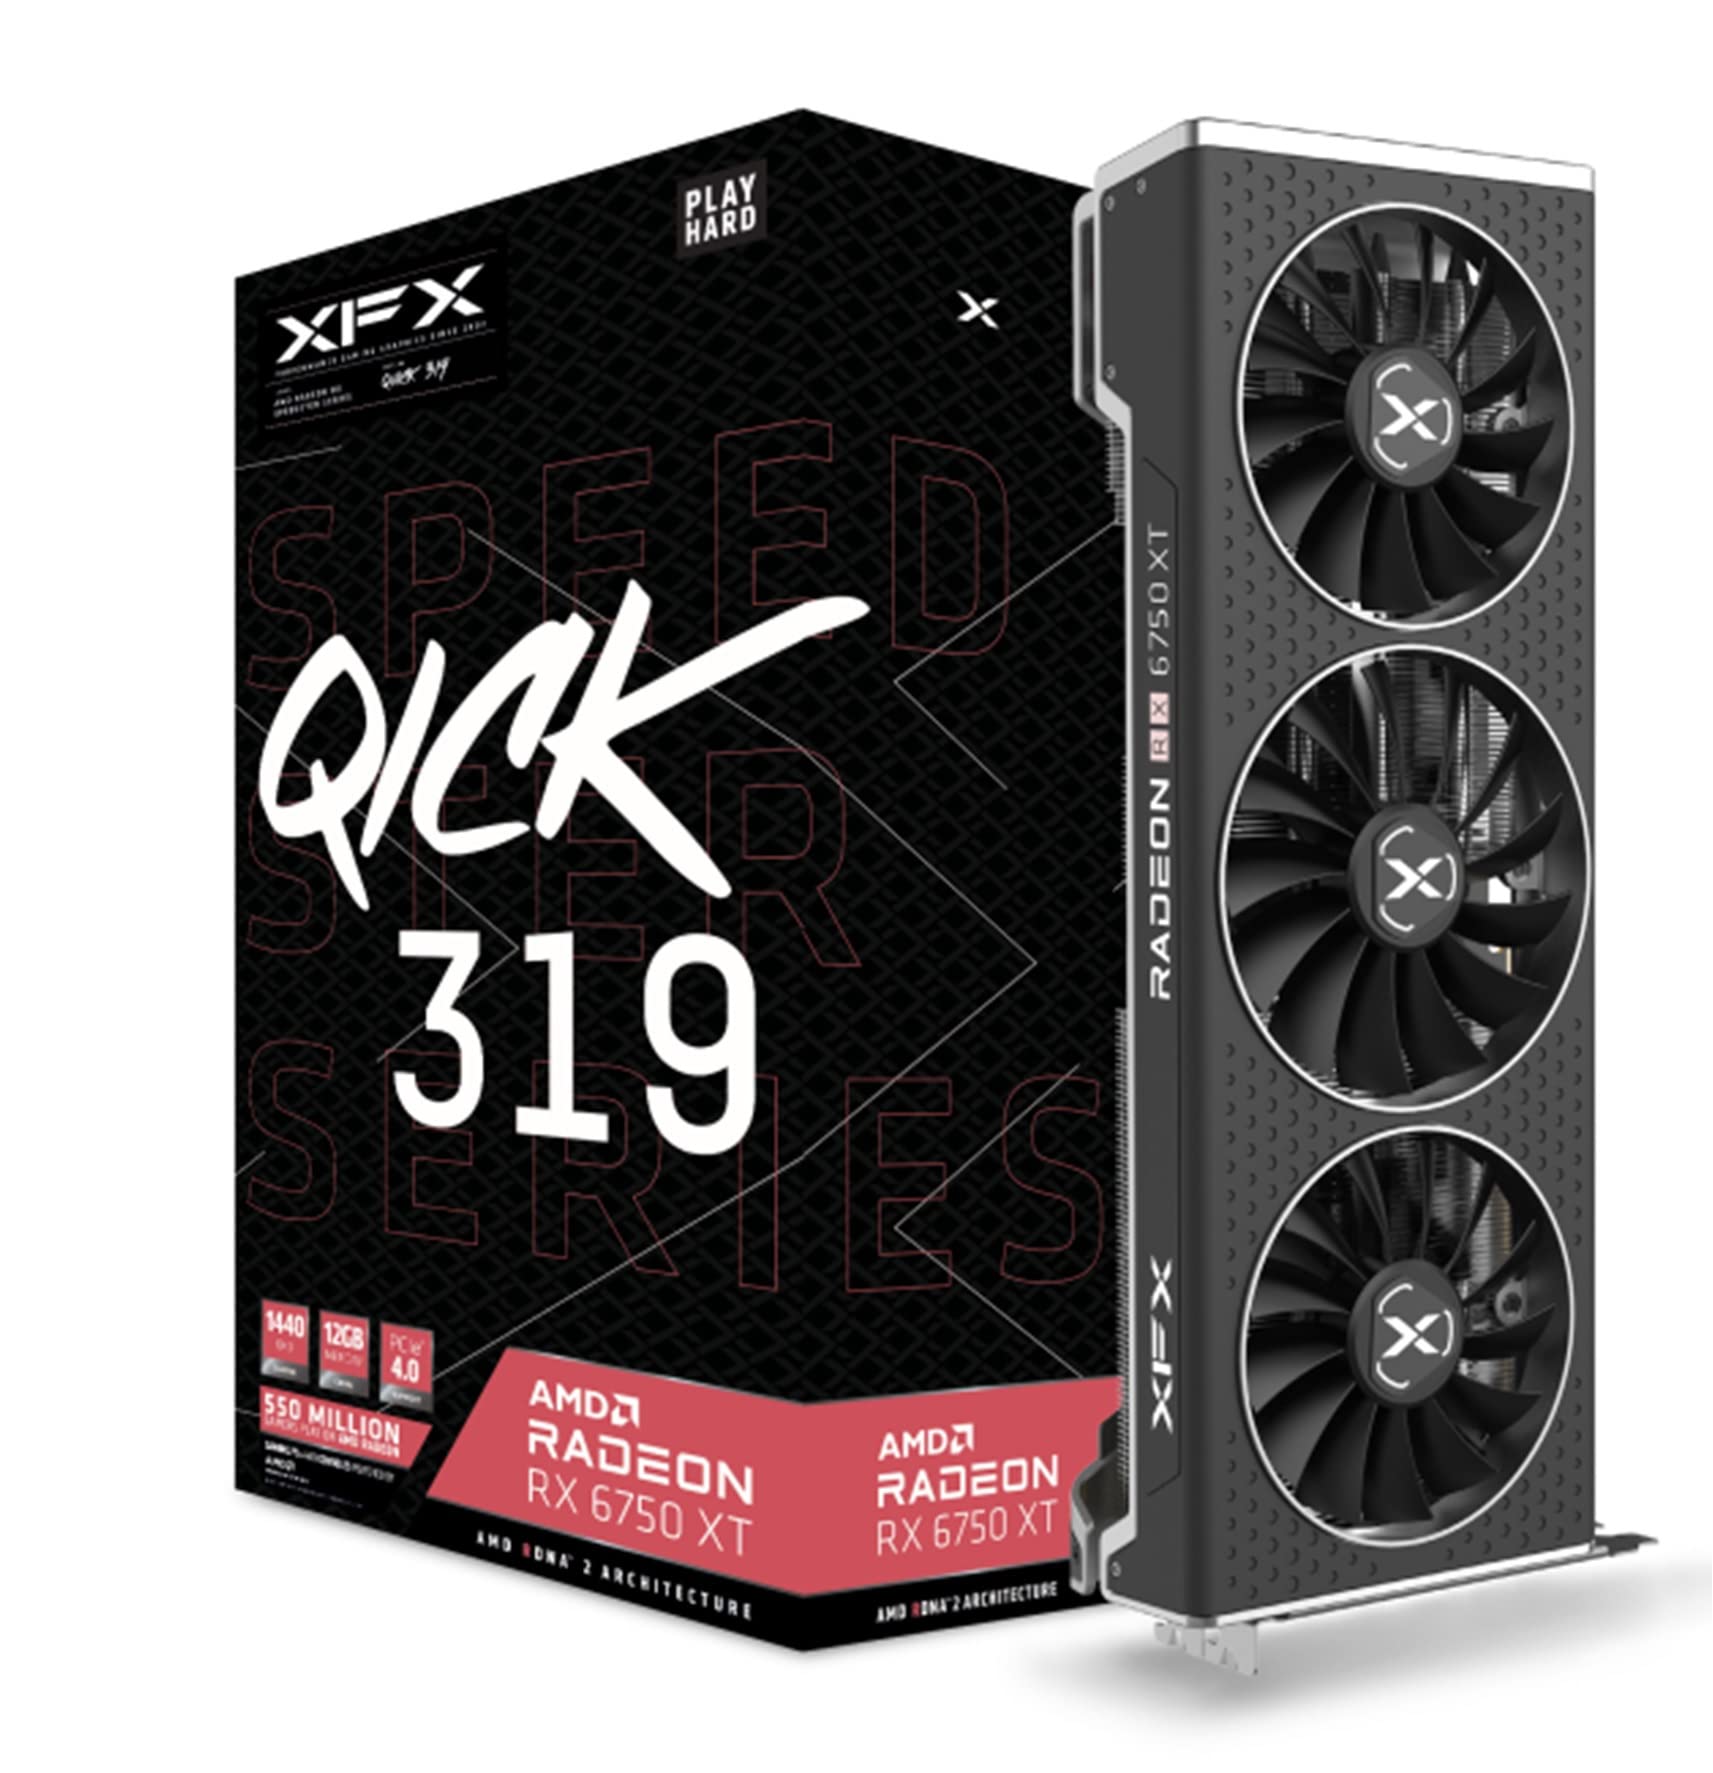 XFX Speedster QICK319 Radeon RX 6750XT 12GB DDR6 CORE Gaming Video Card $300 + Free Shipping